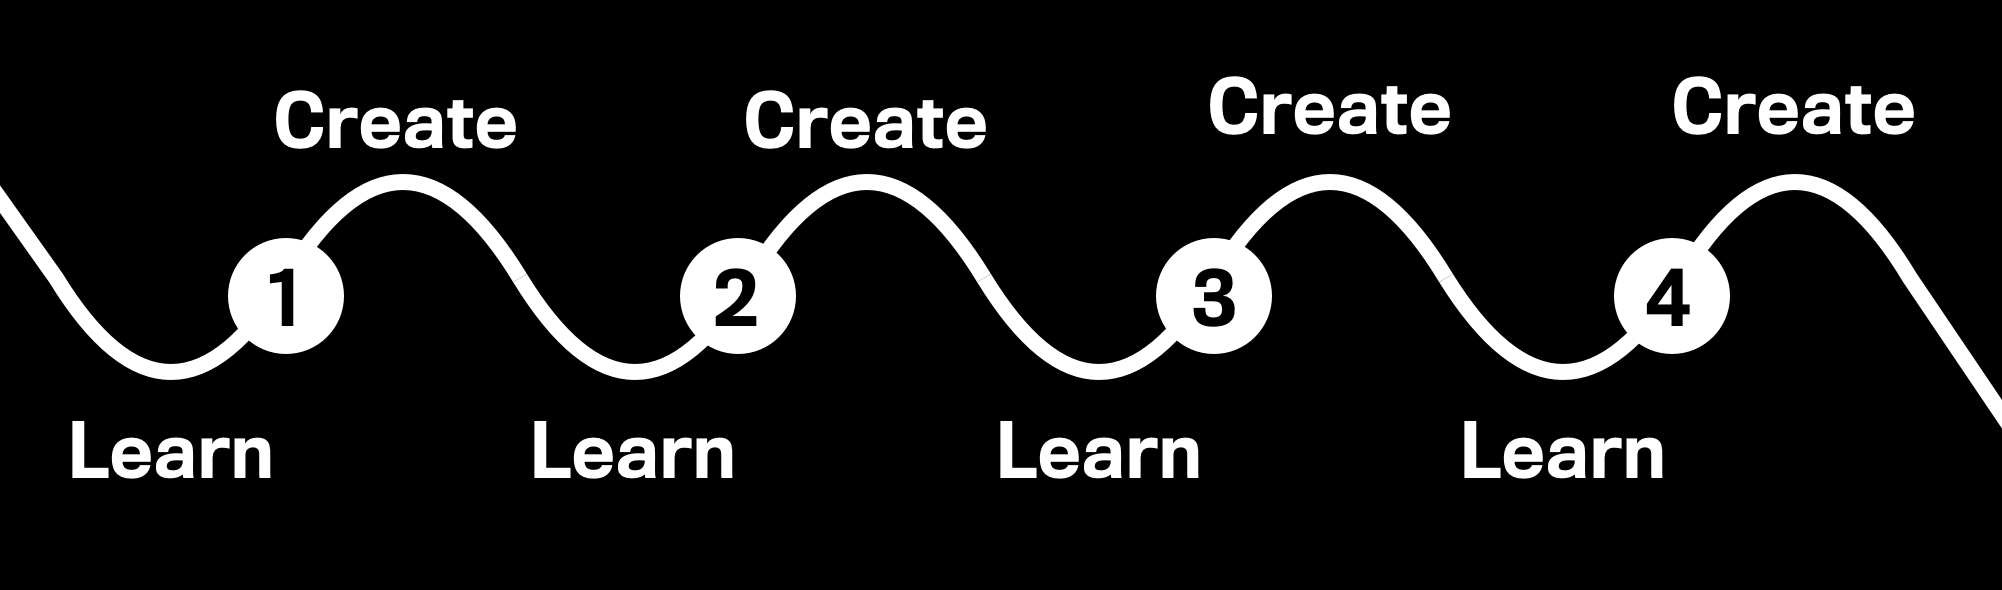 create and learn